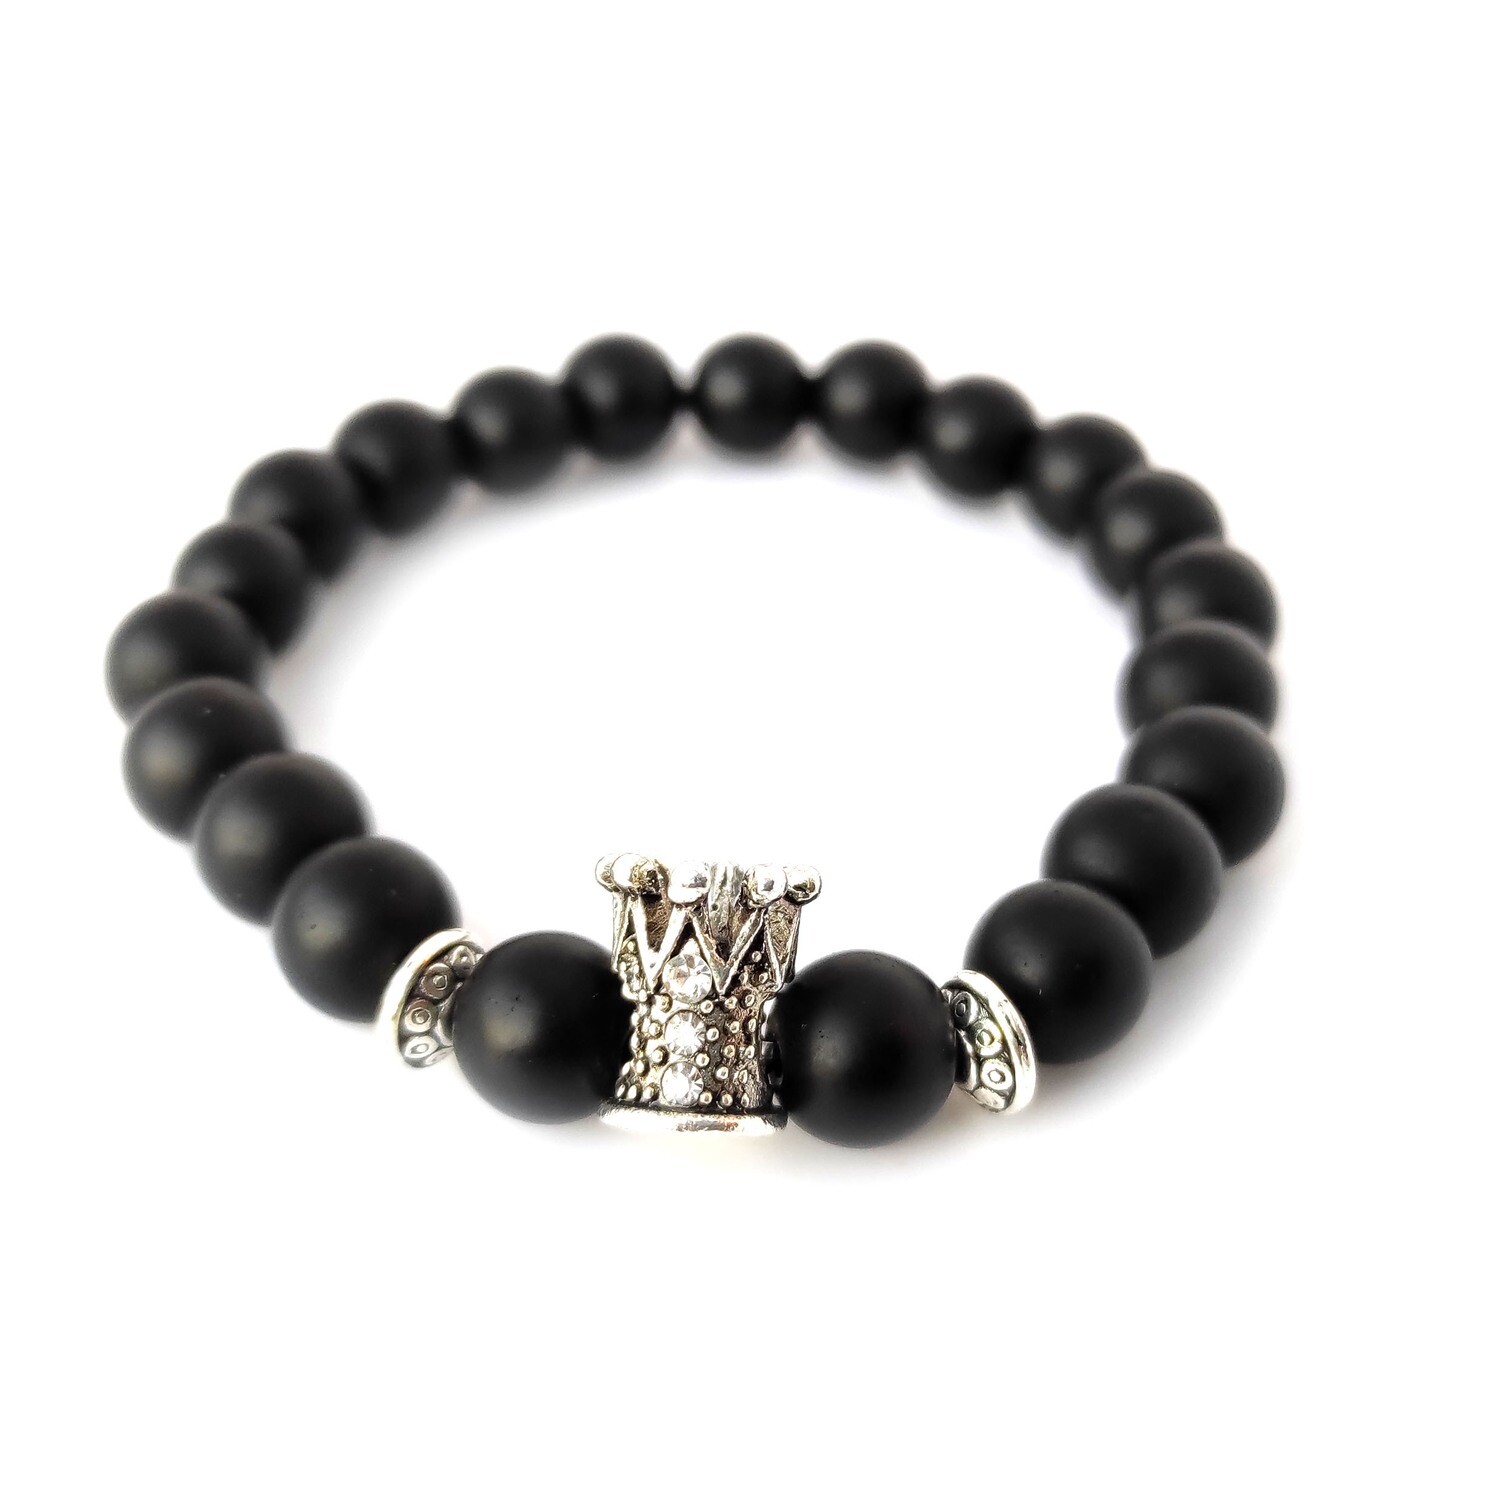 Black onyx & crown bracelet